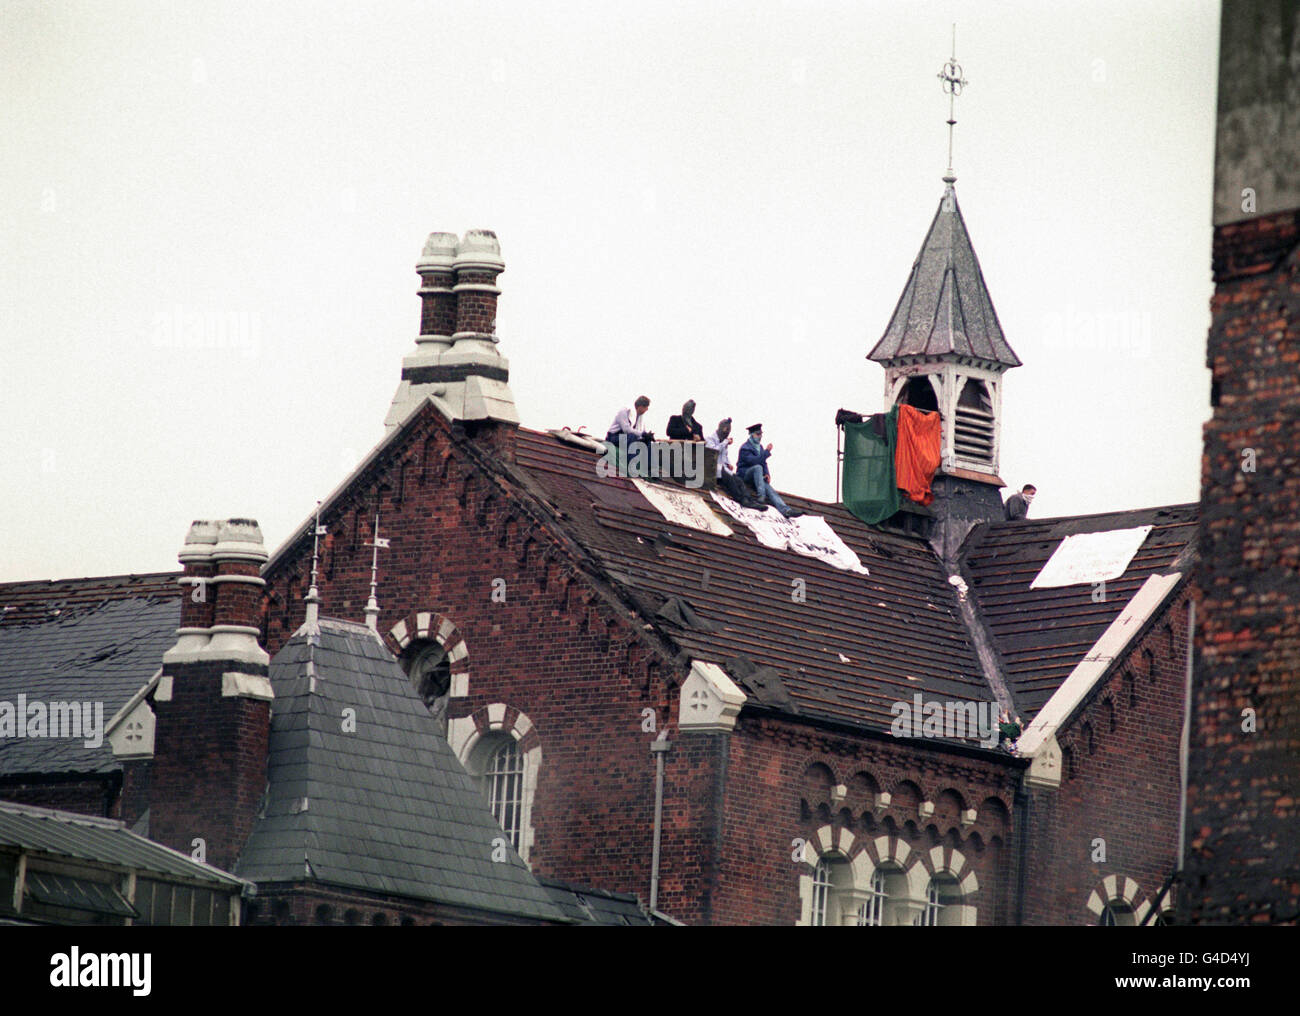 British Crime - Prison - Riots - Strangeways - Manchester - 1990. Rioting inmates on the roof of Strangeways prison in Manchester. Stock Photo